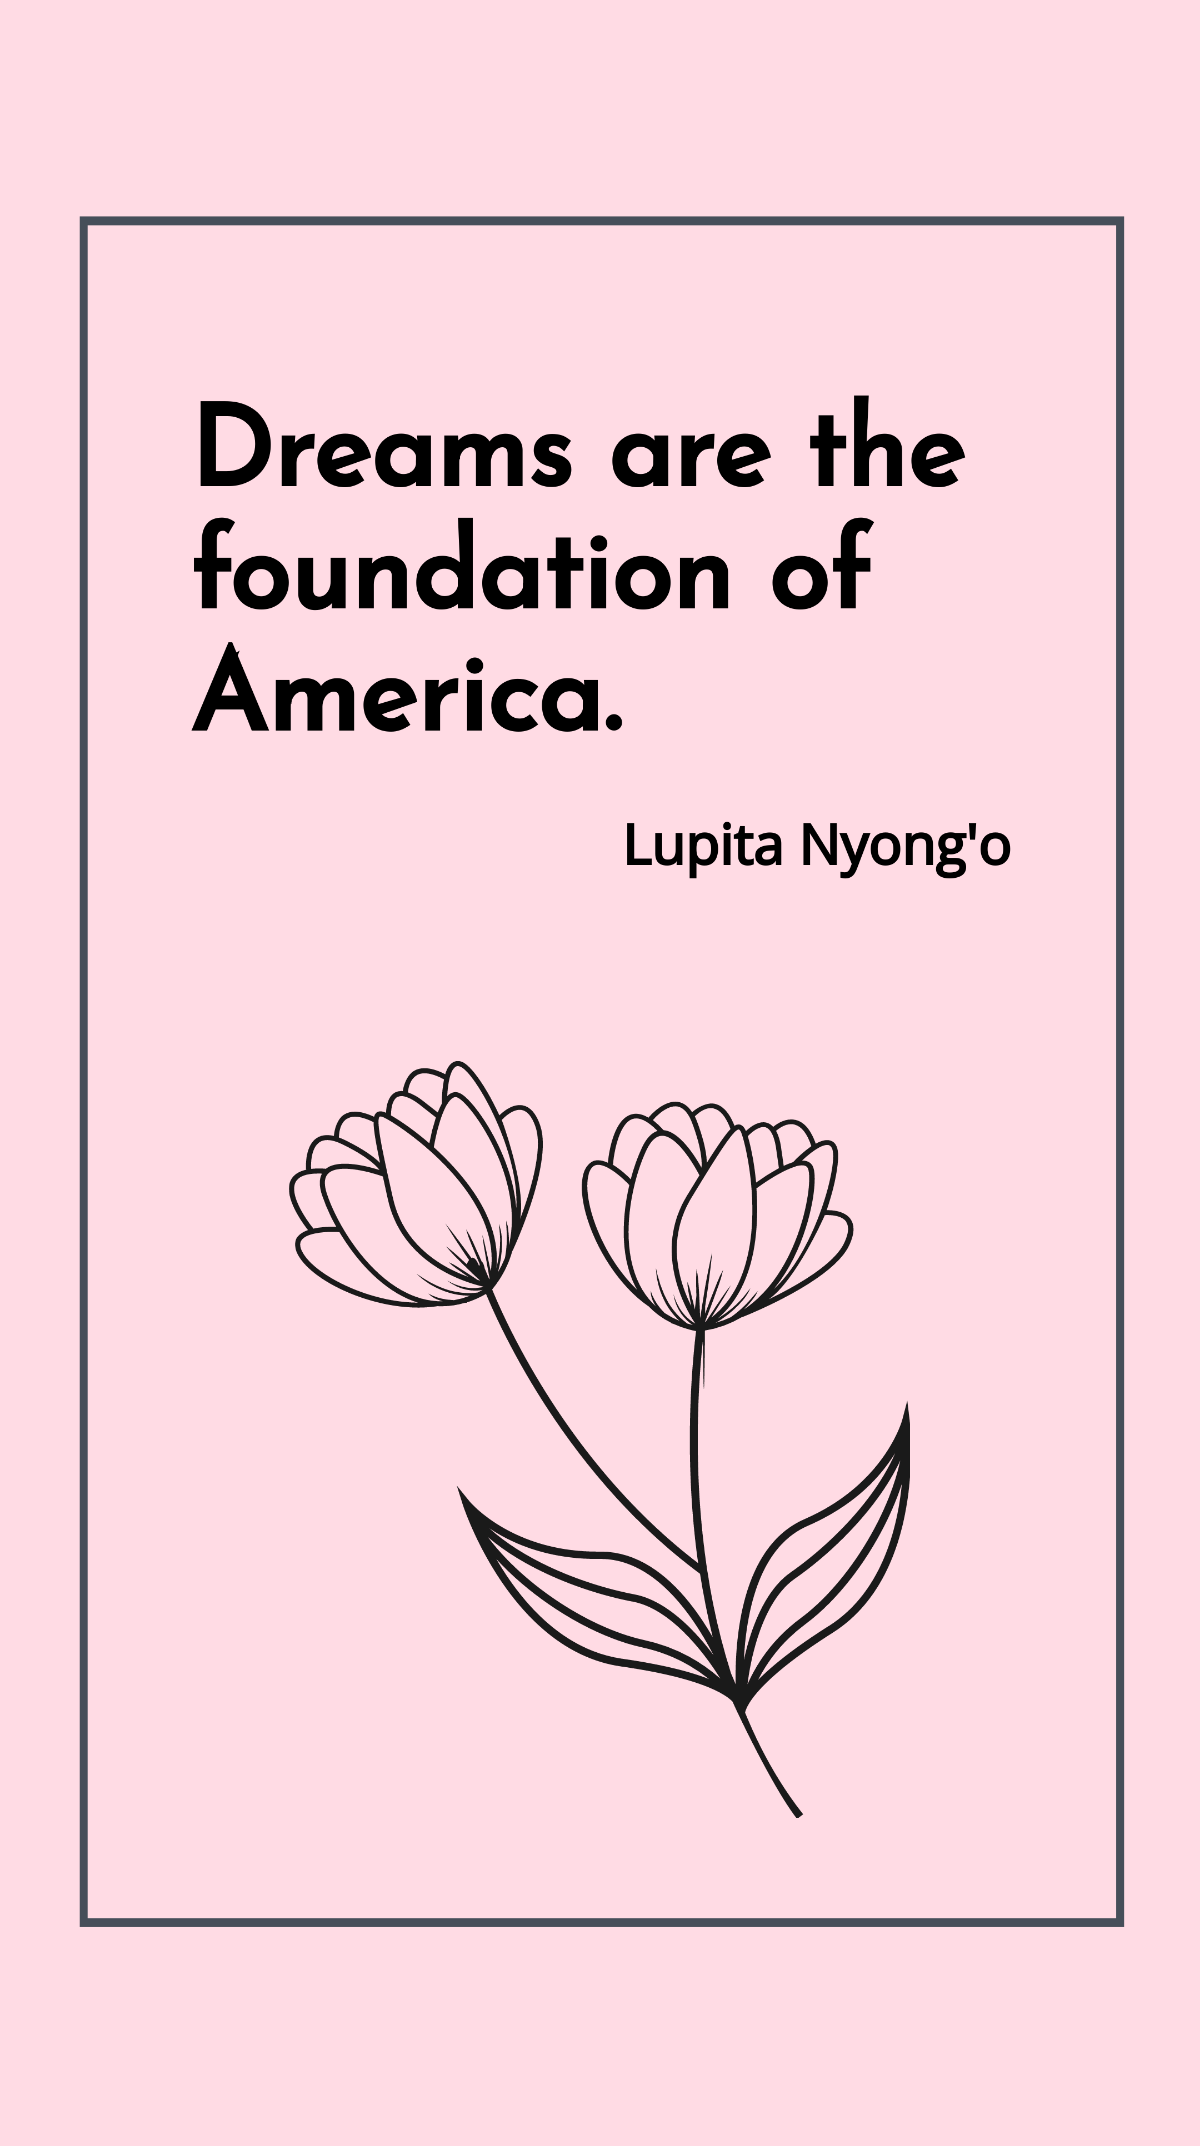 Lupita Nyong'o - Dreams are the foundation of America.